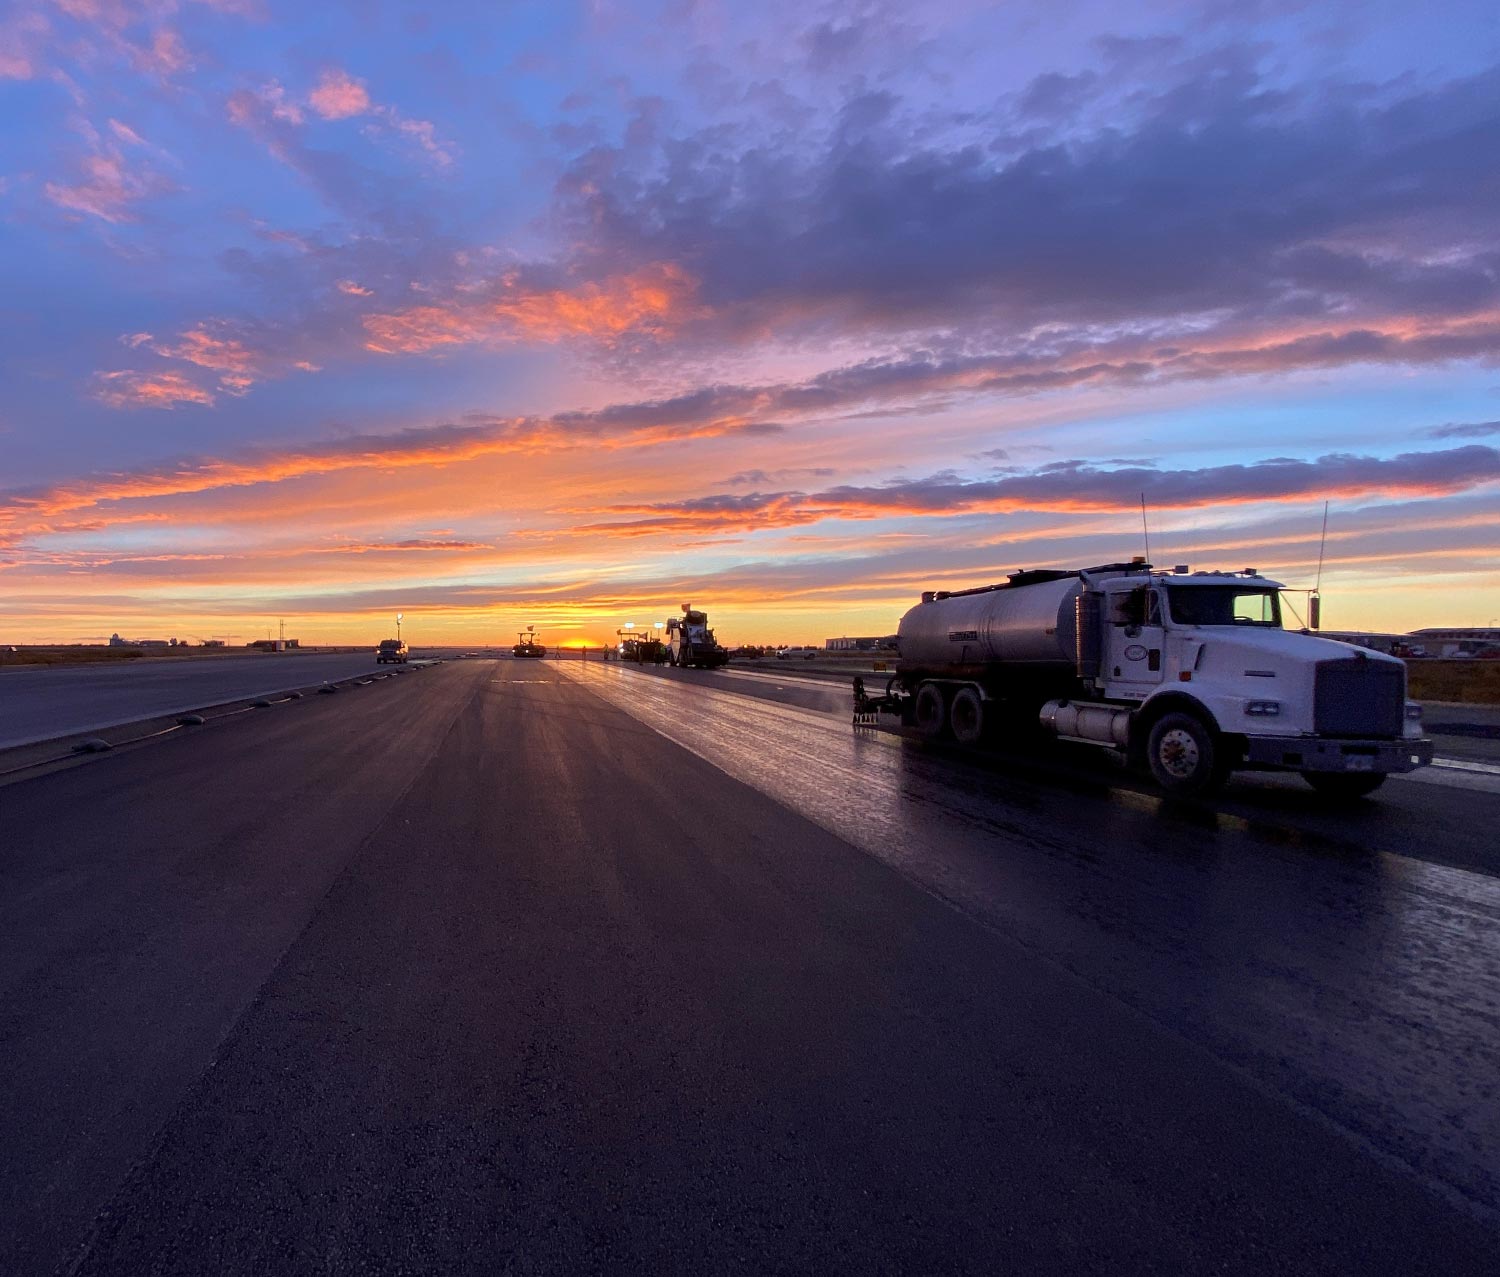 a work truck drives down an open road at dusk